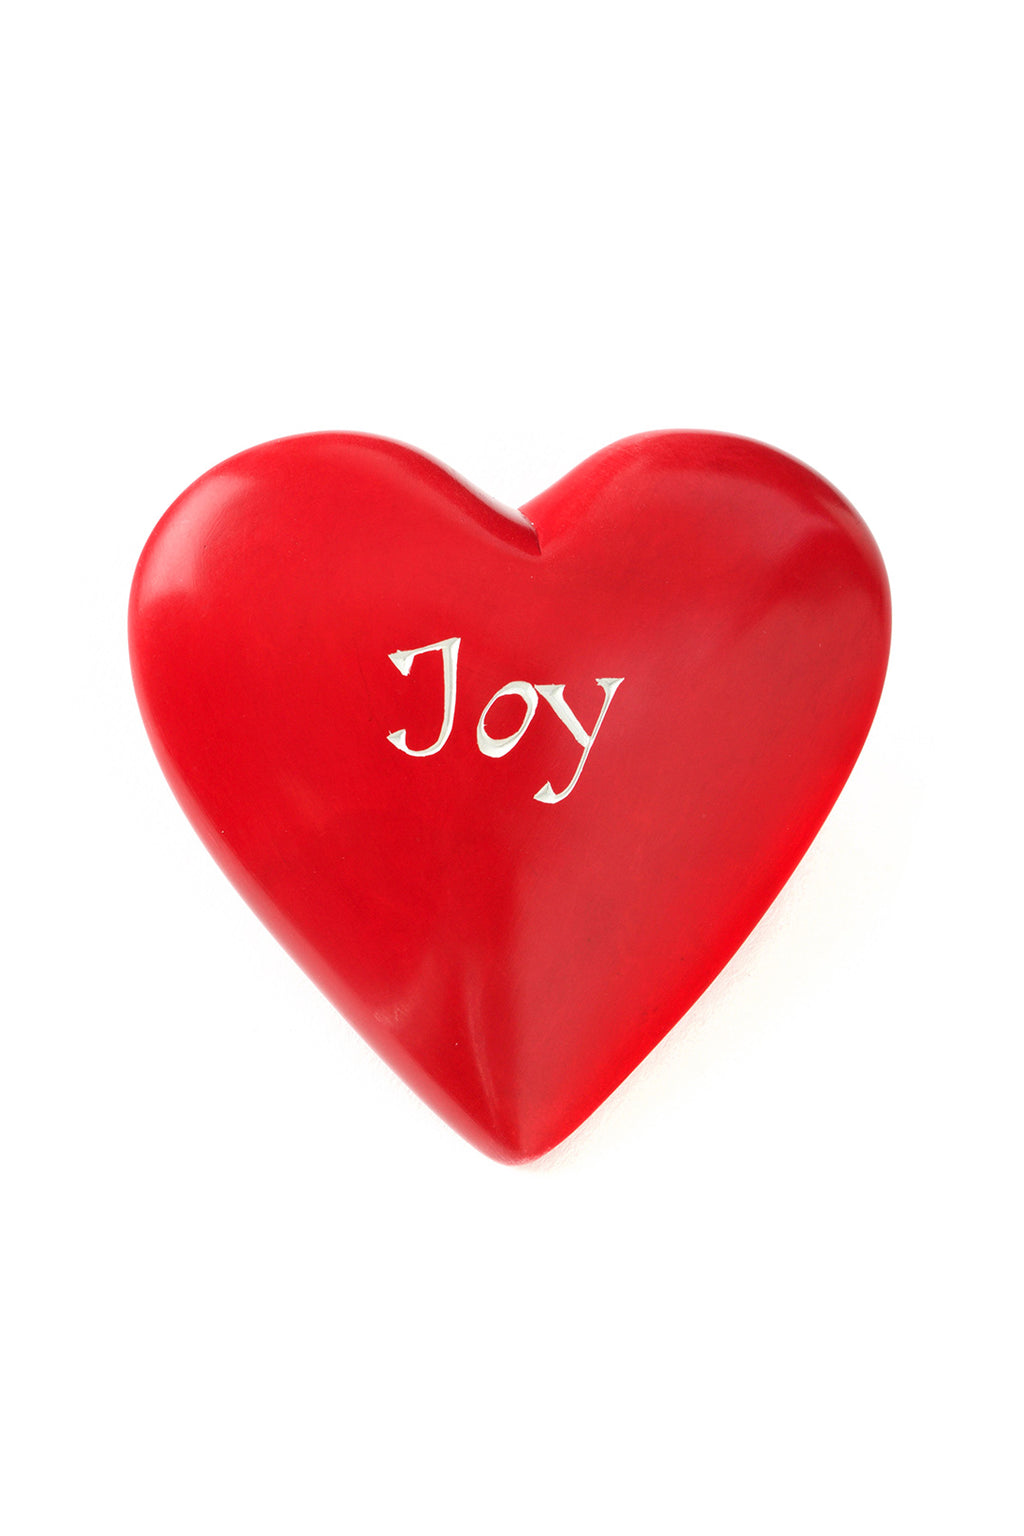 Kisii Stone Wise Words Heart:  Joy Default Title